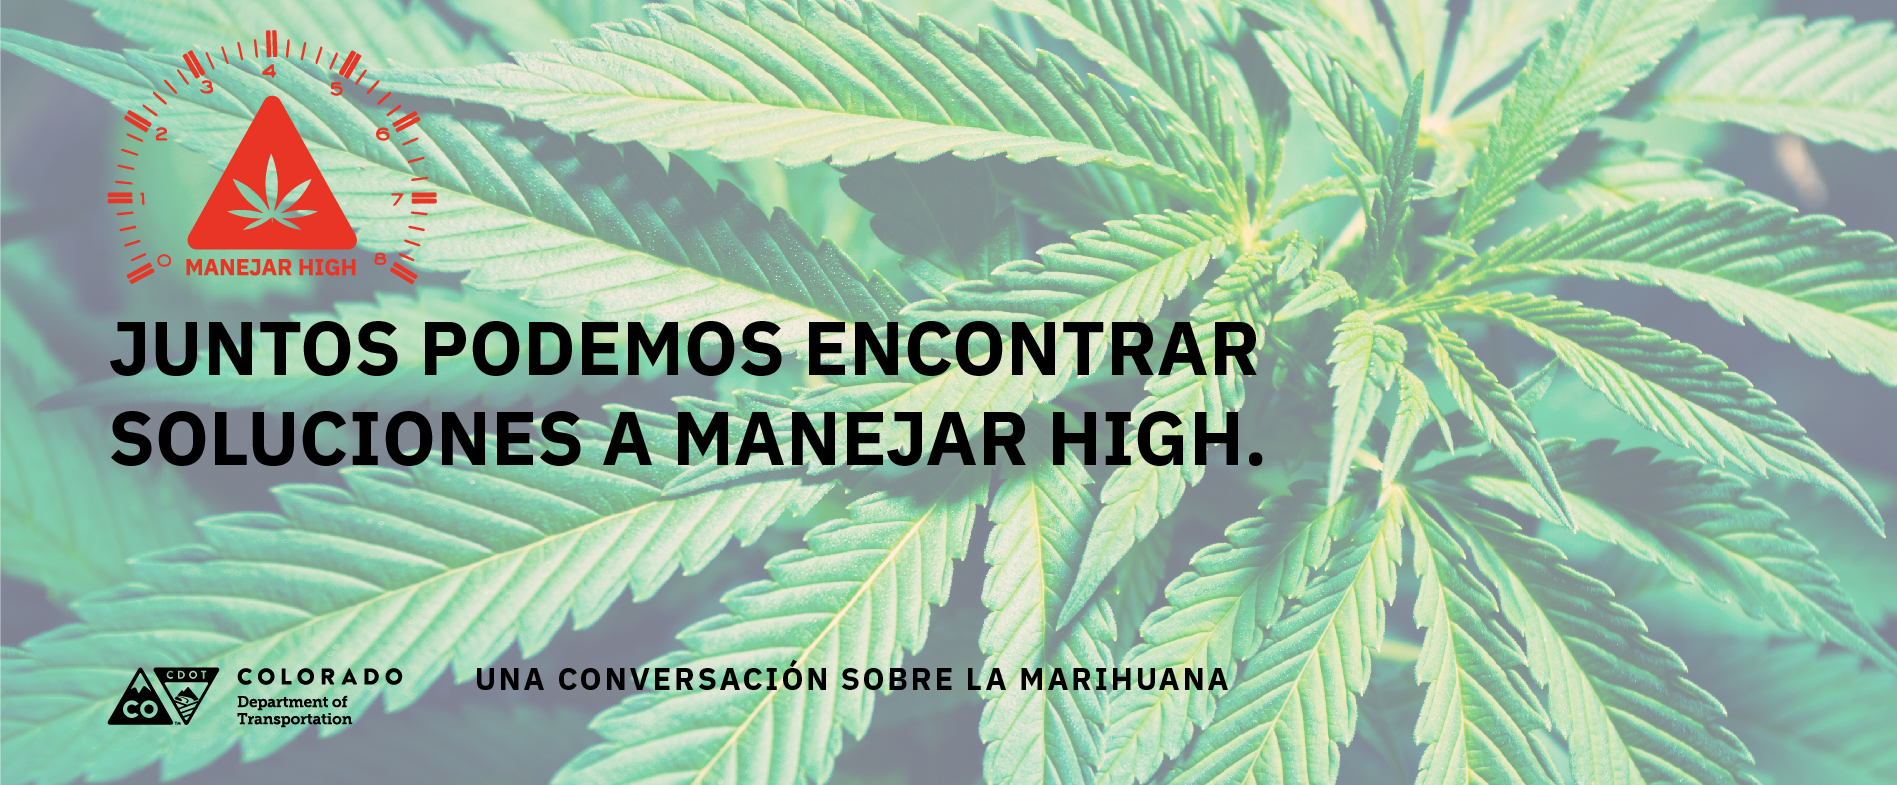 CD038_CannabisConversations_GraphicKit_Mech_v1_Spanish_Horizontal_C.jpg detail image